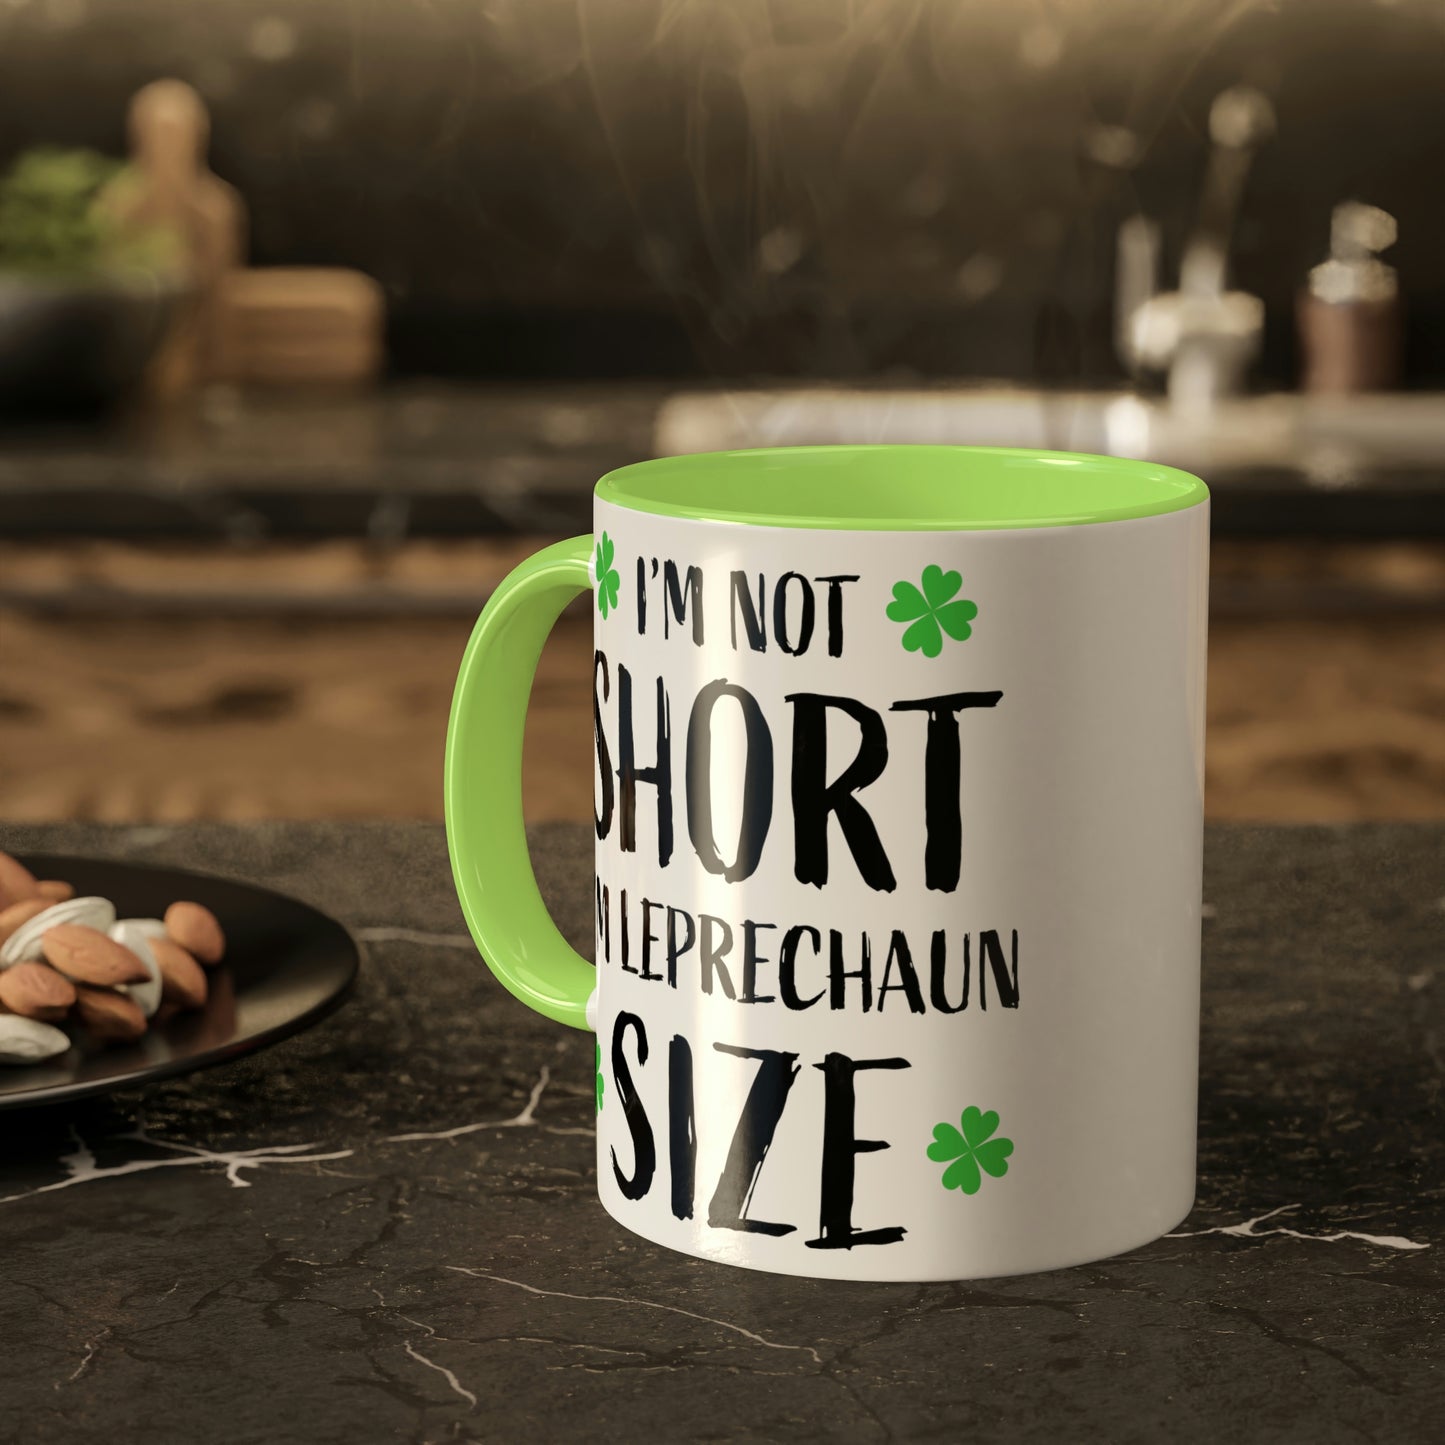 Leprechaun Size Mug